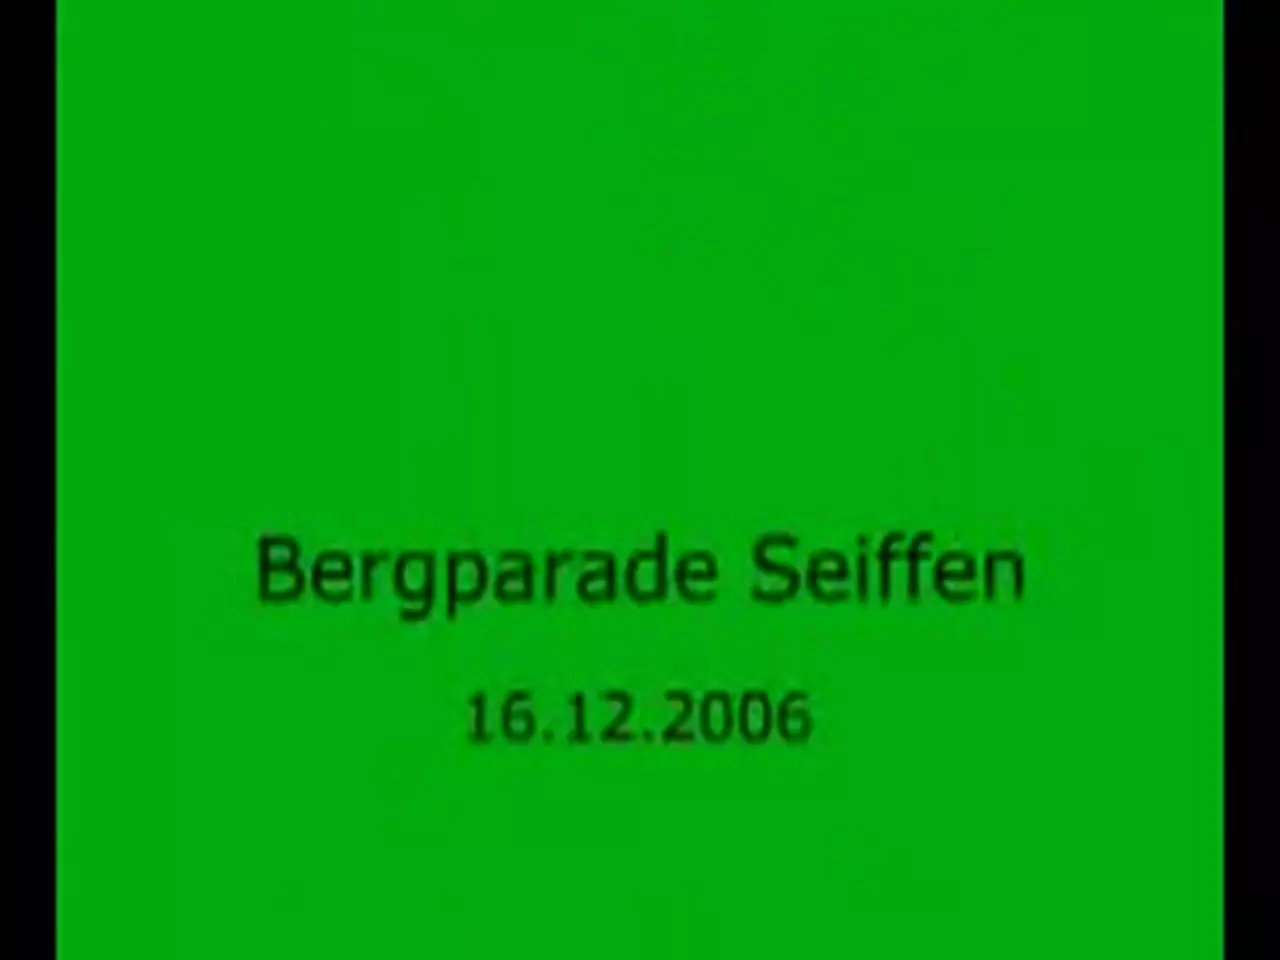 Foto: Bergparade in Seiffen 2006